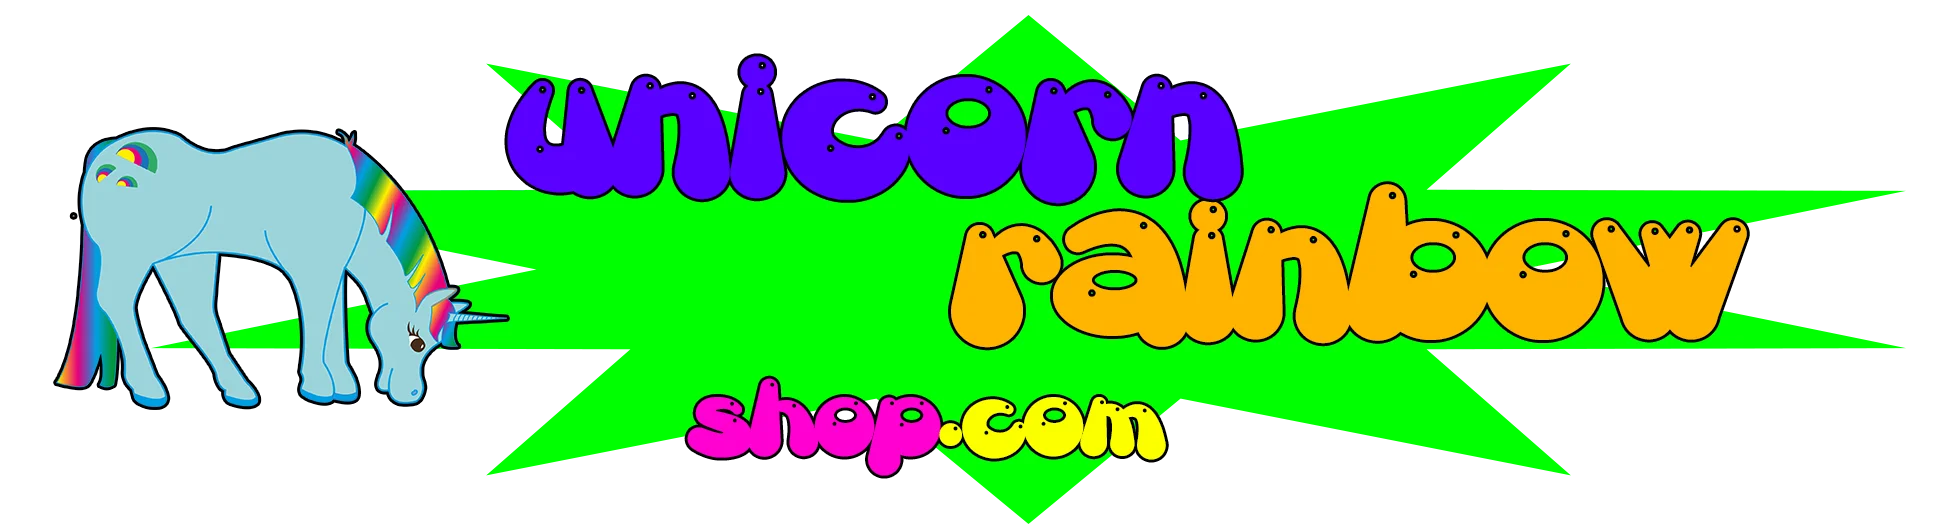 Rainbow unicorn Shop